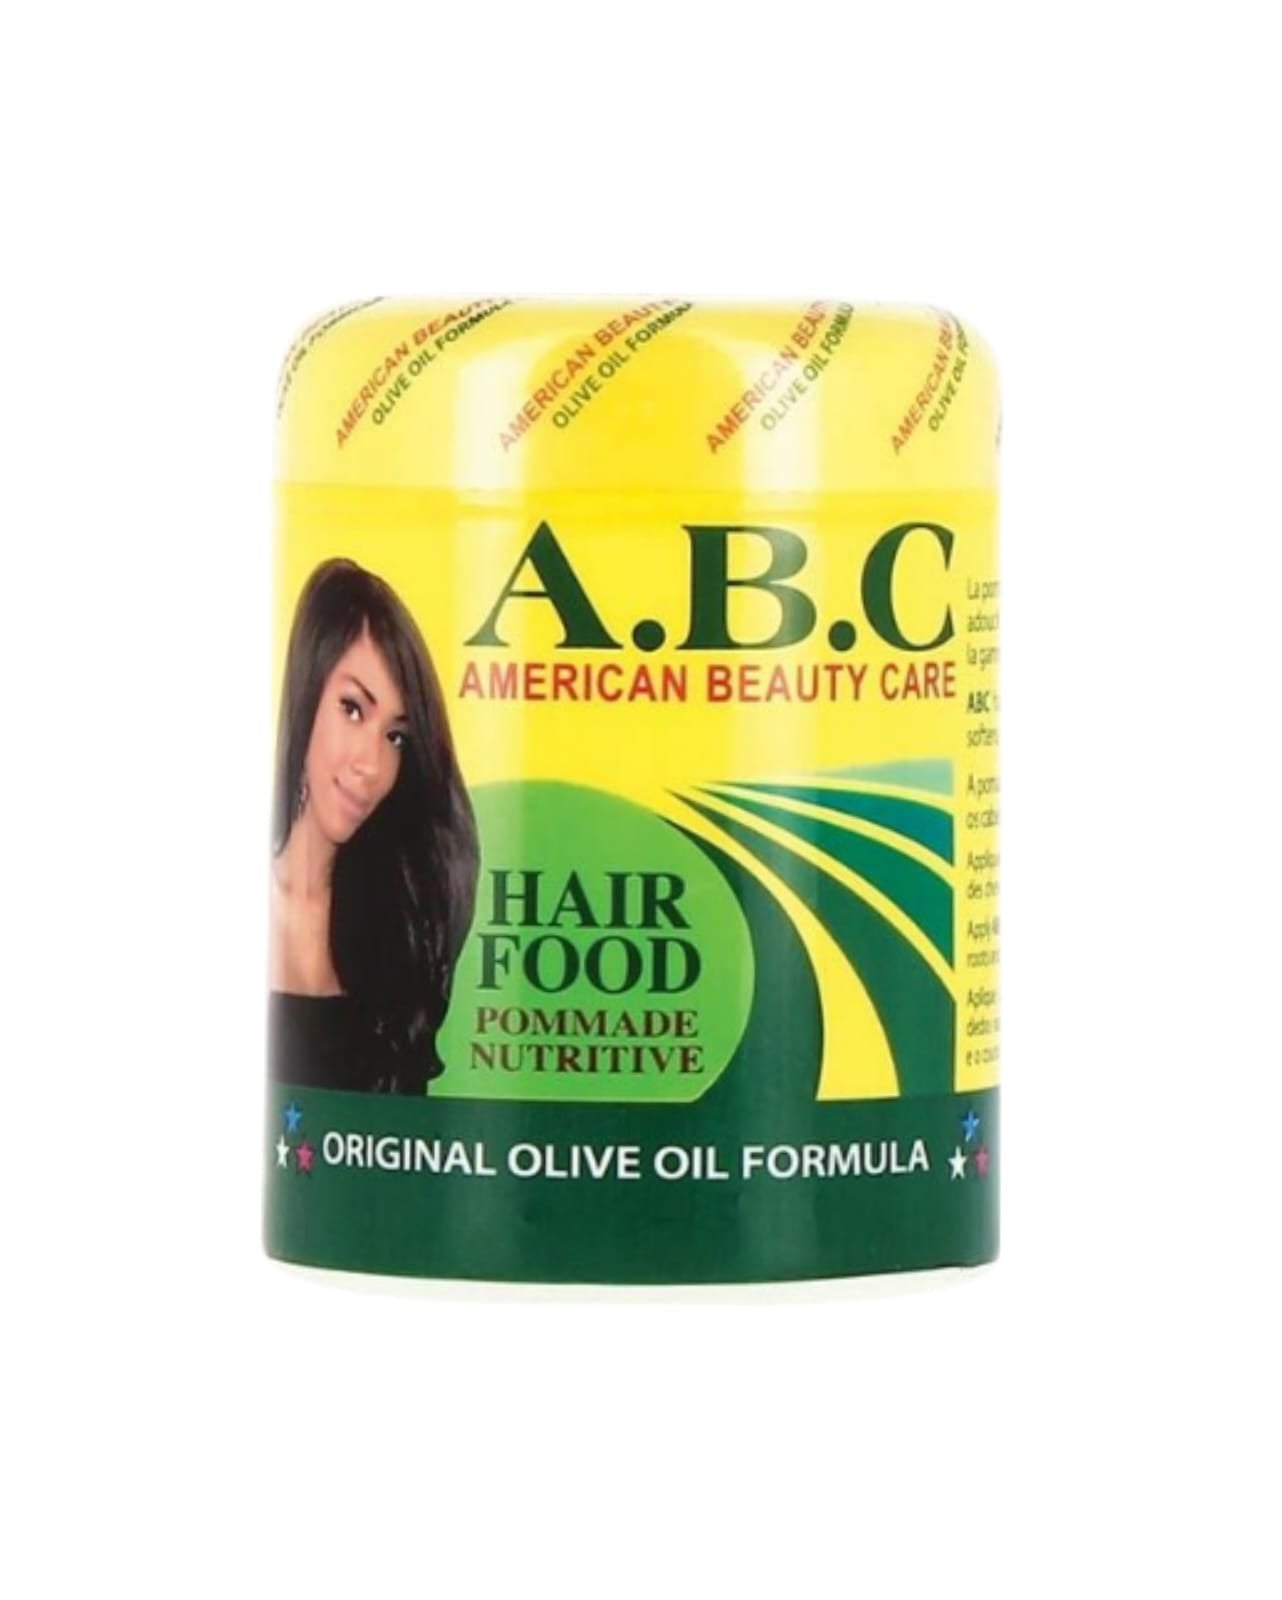 A.B.C. Hair Food Pommade Nutritive Original Olive Oil